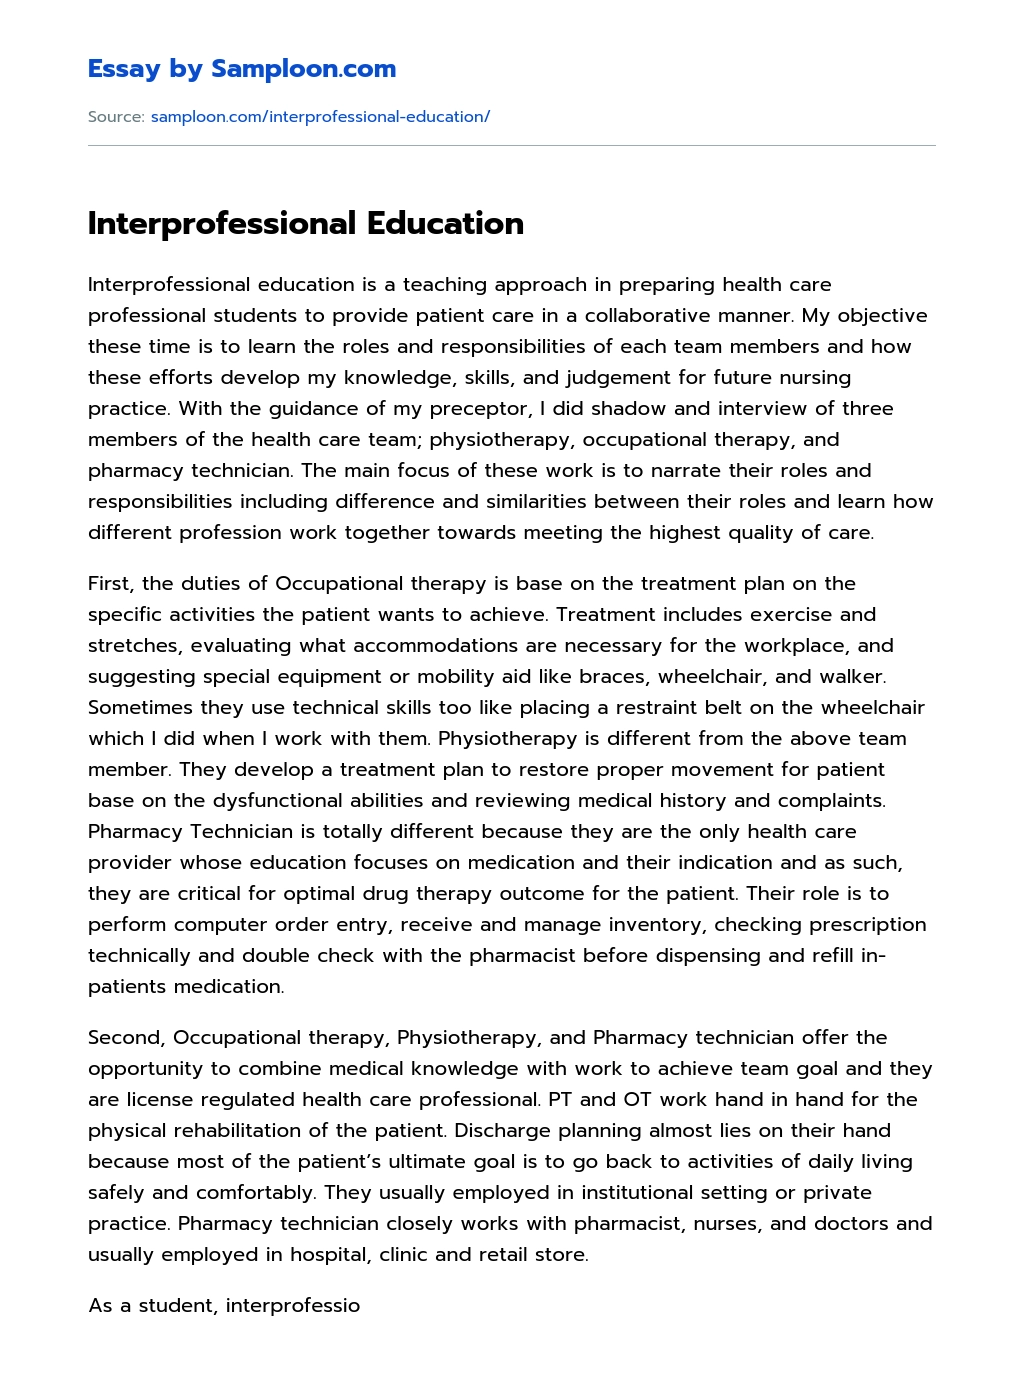 Interprofessional Education essay